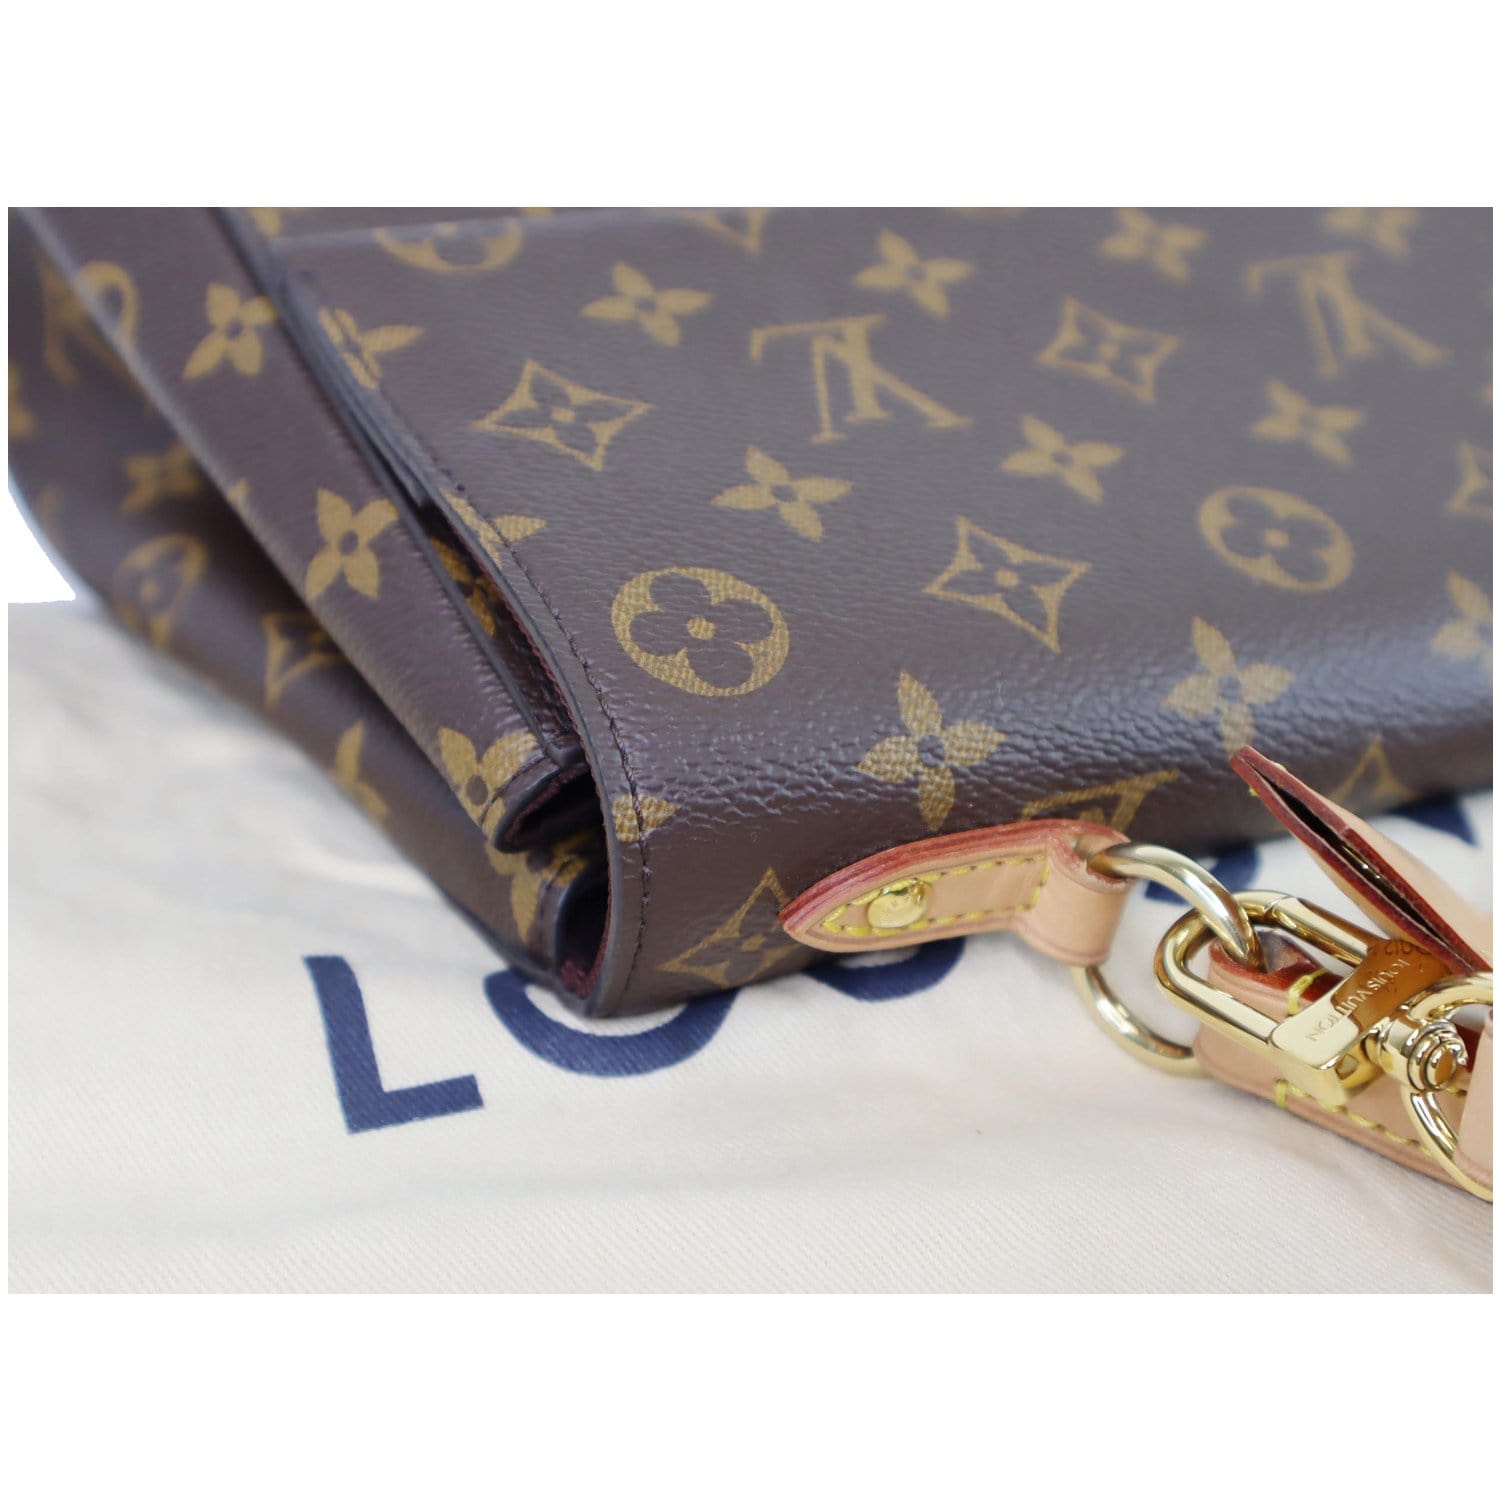 Louis Vuitton Cluny Bag in Monogram Canvas